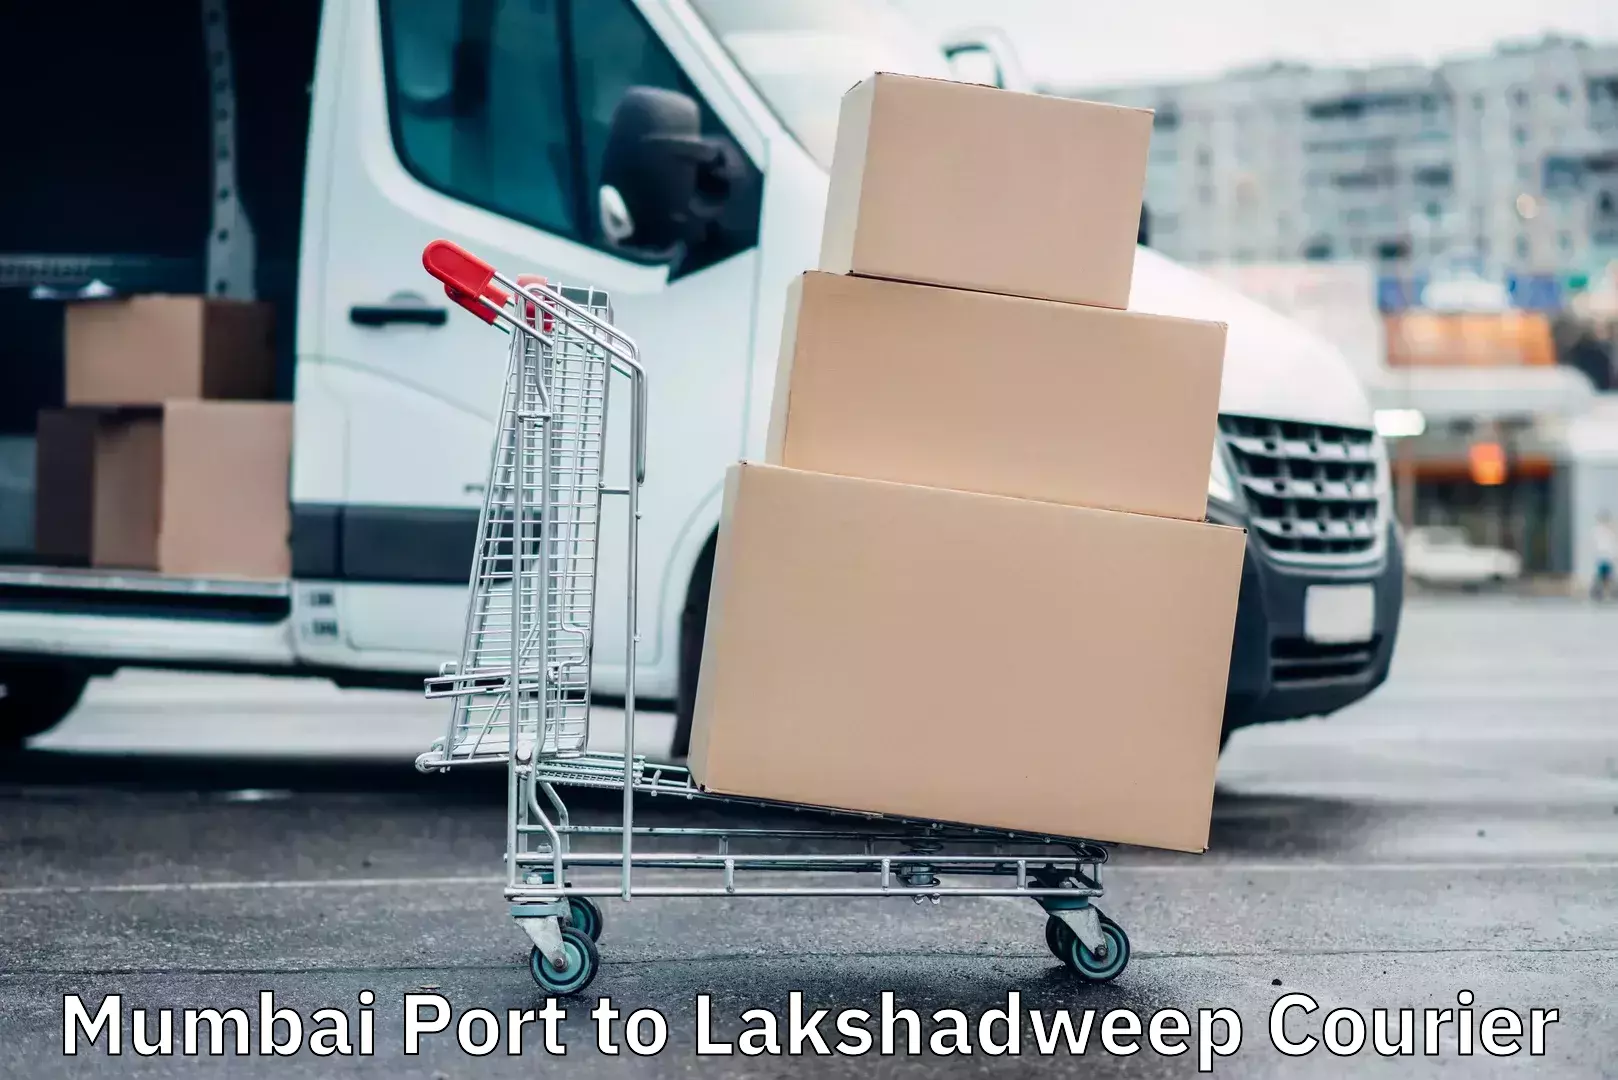 Enhanced tracking features Mumbai Port to Lakshadweep